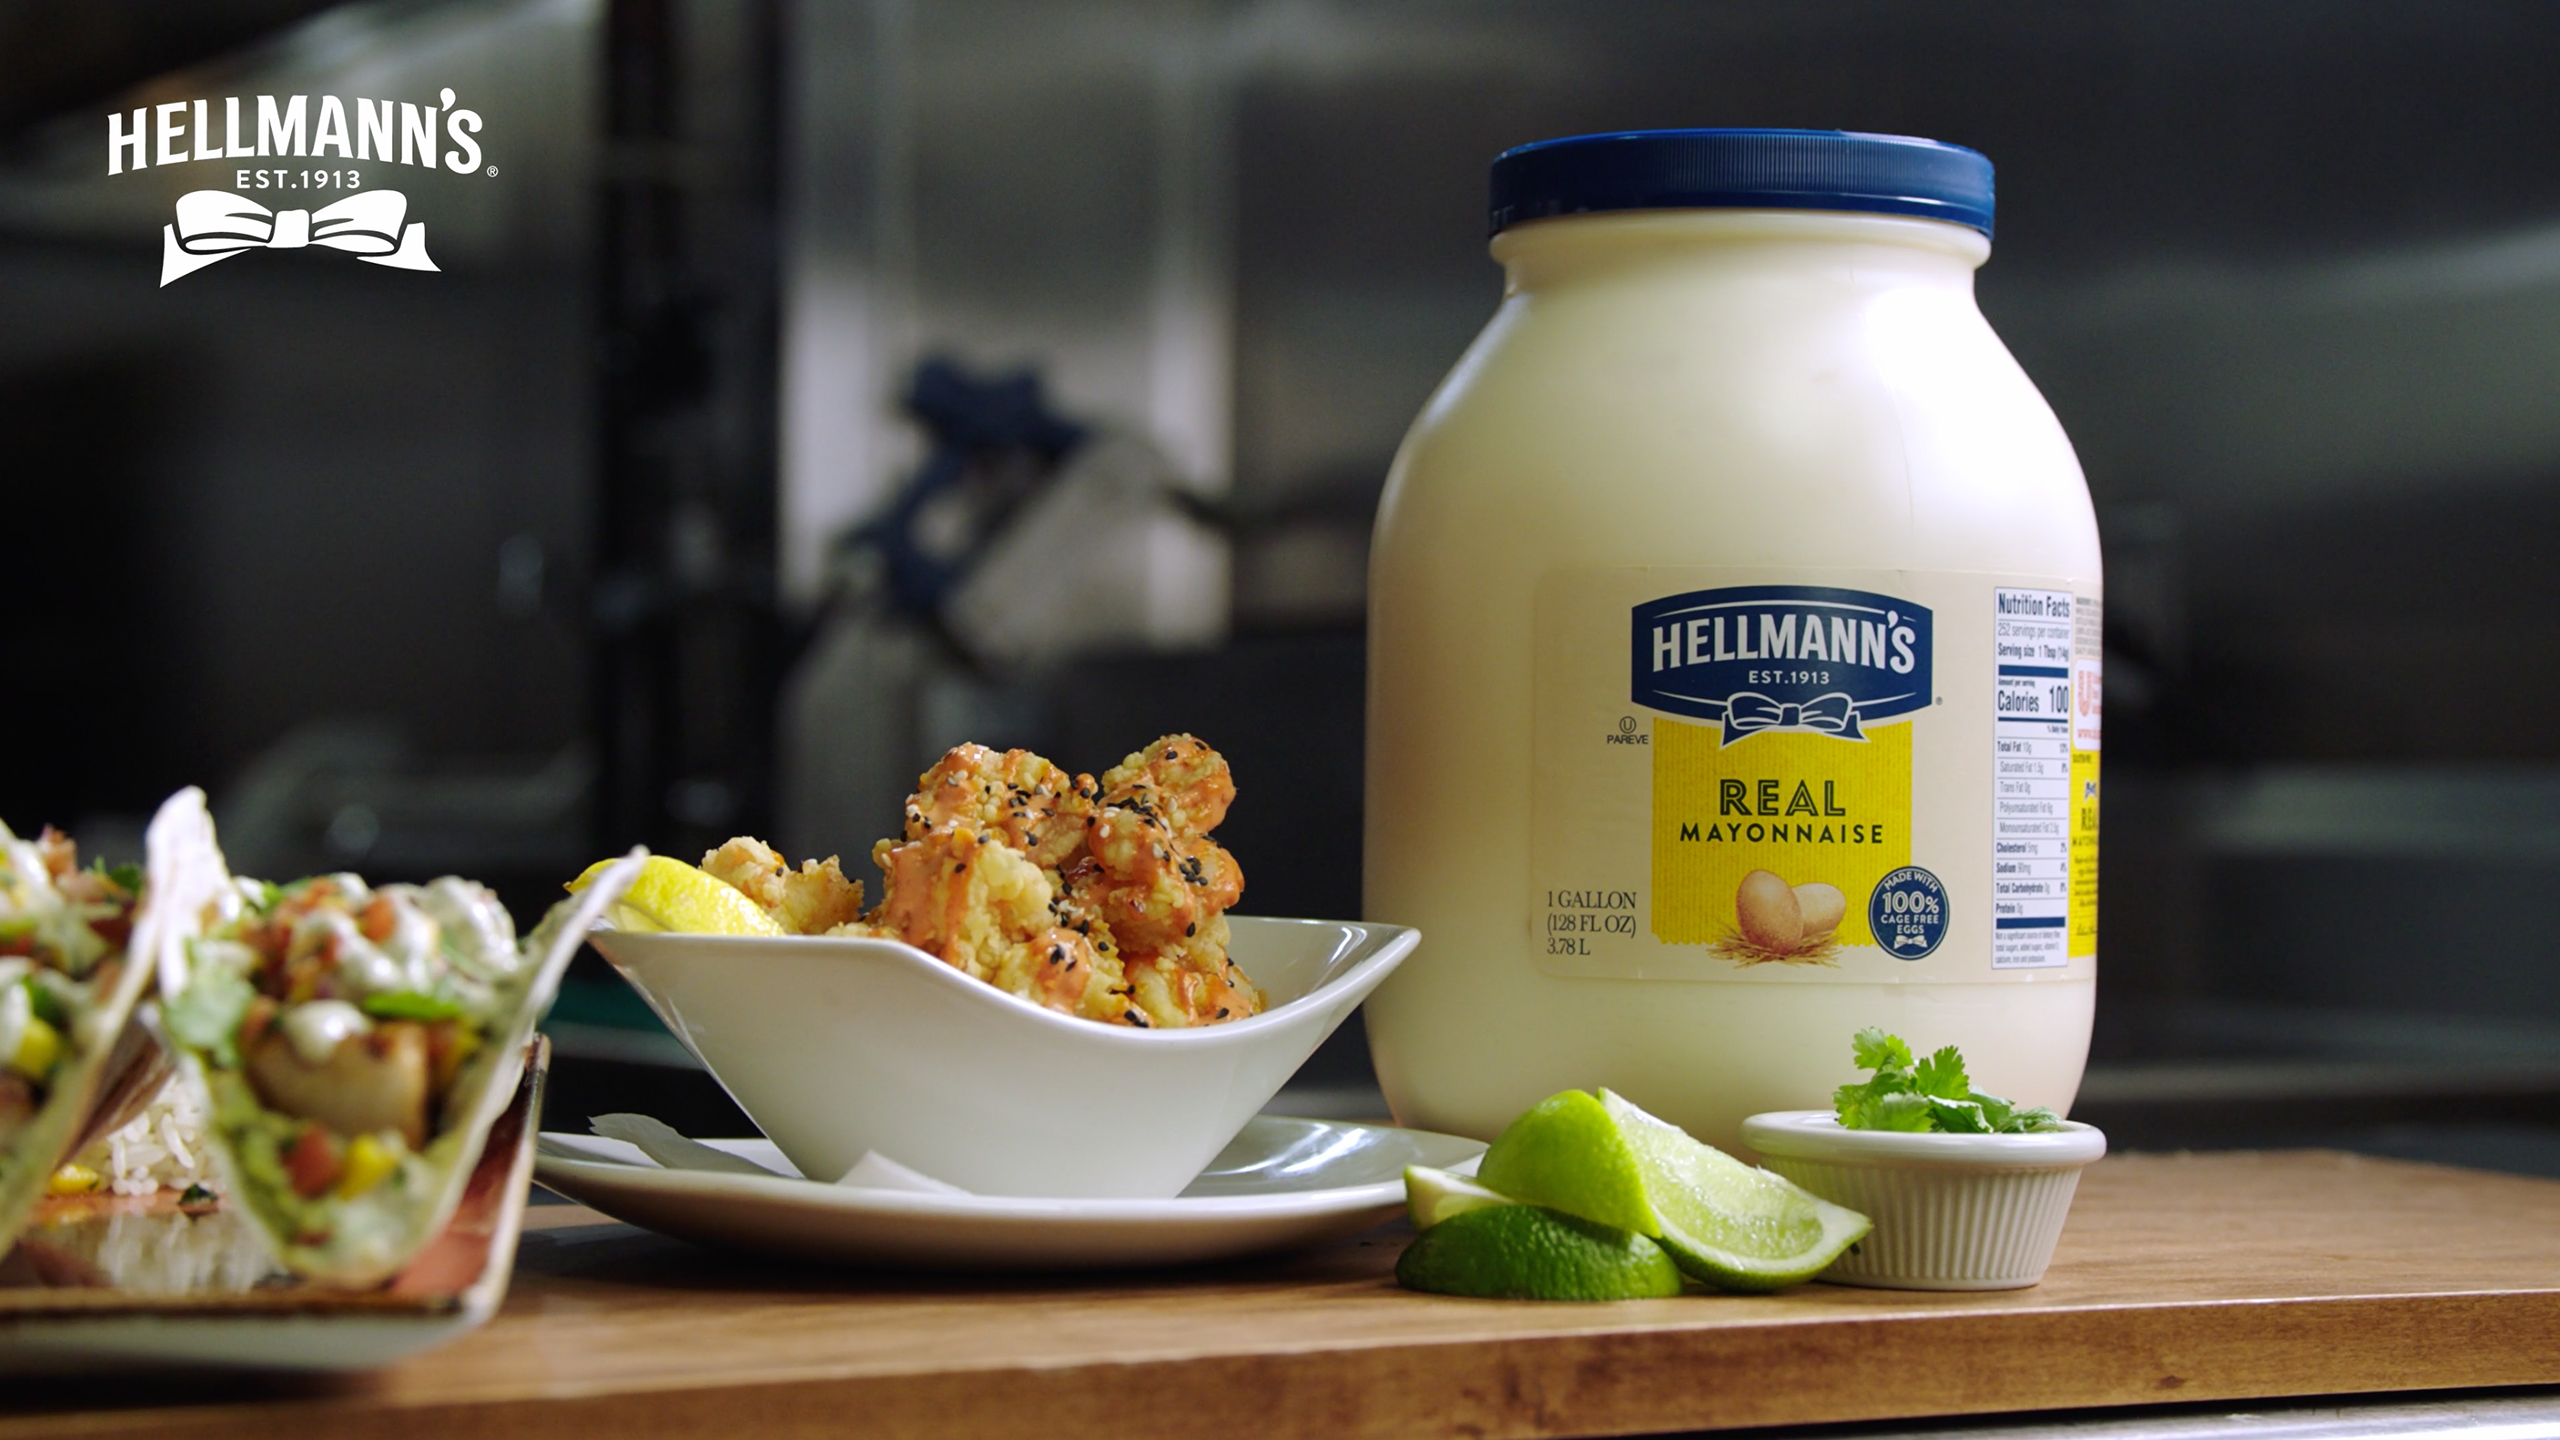 Hellmann's Real Mayonnaise jar next to recipe